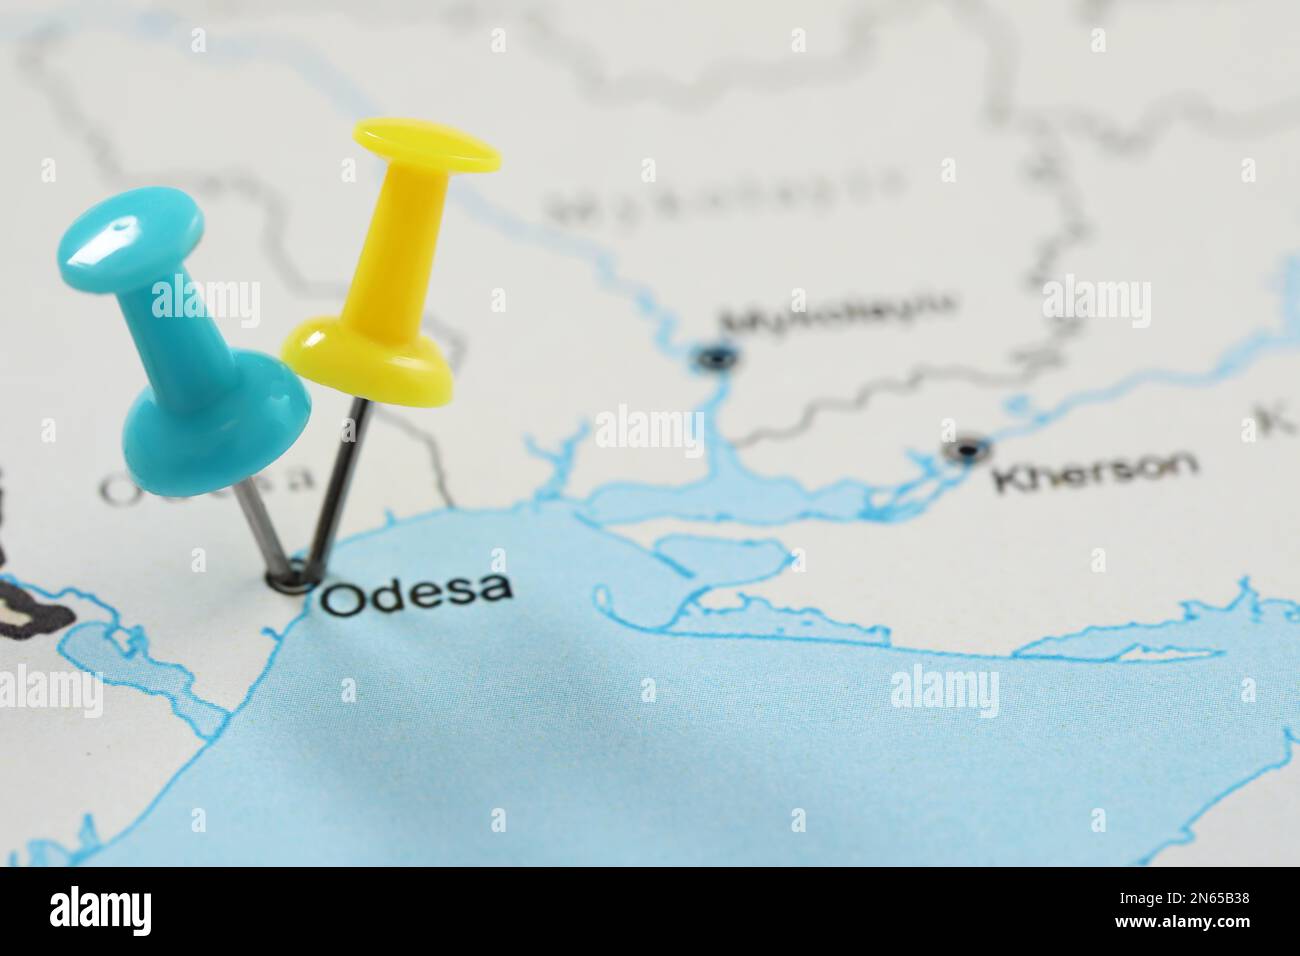 MYKOLAIV, UKRAINE - NOVEMBER 09, 2020: Odesa city marked with push pins on contour map of Ukraine, closeup Stock Photo